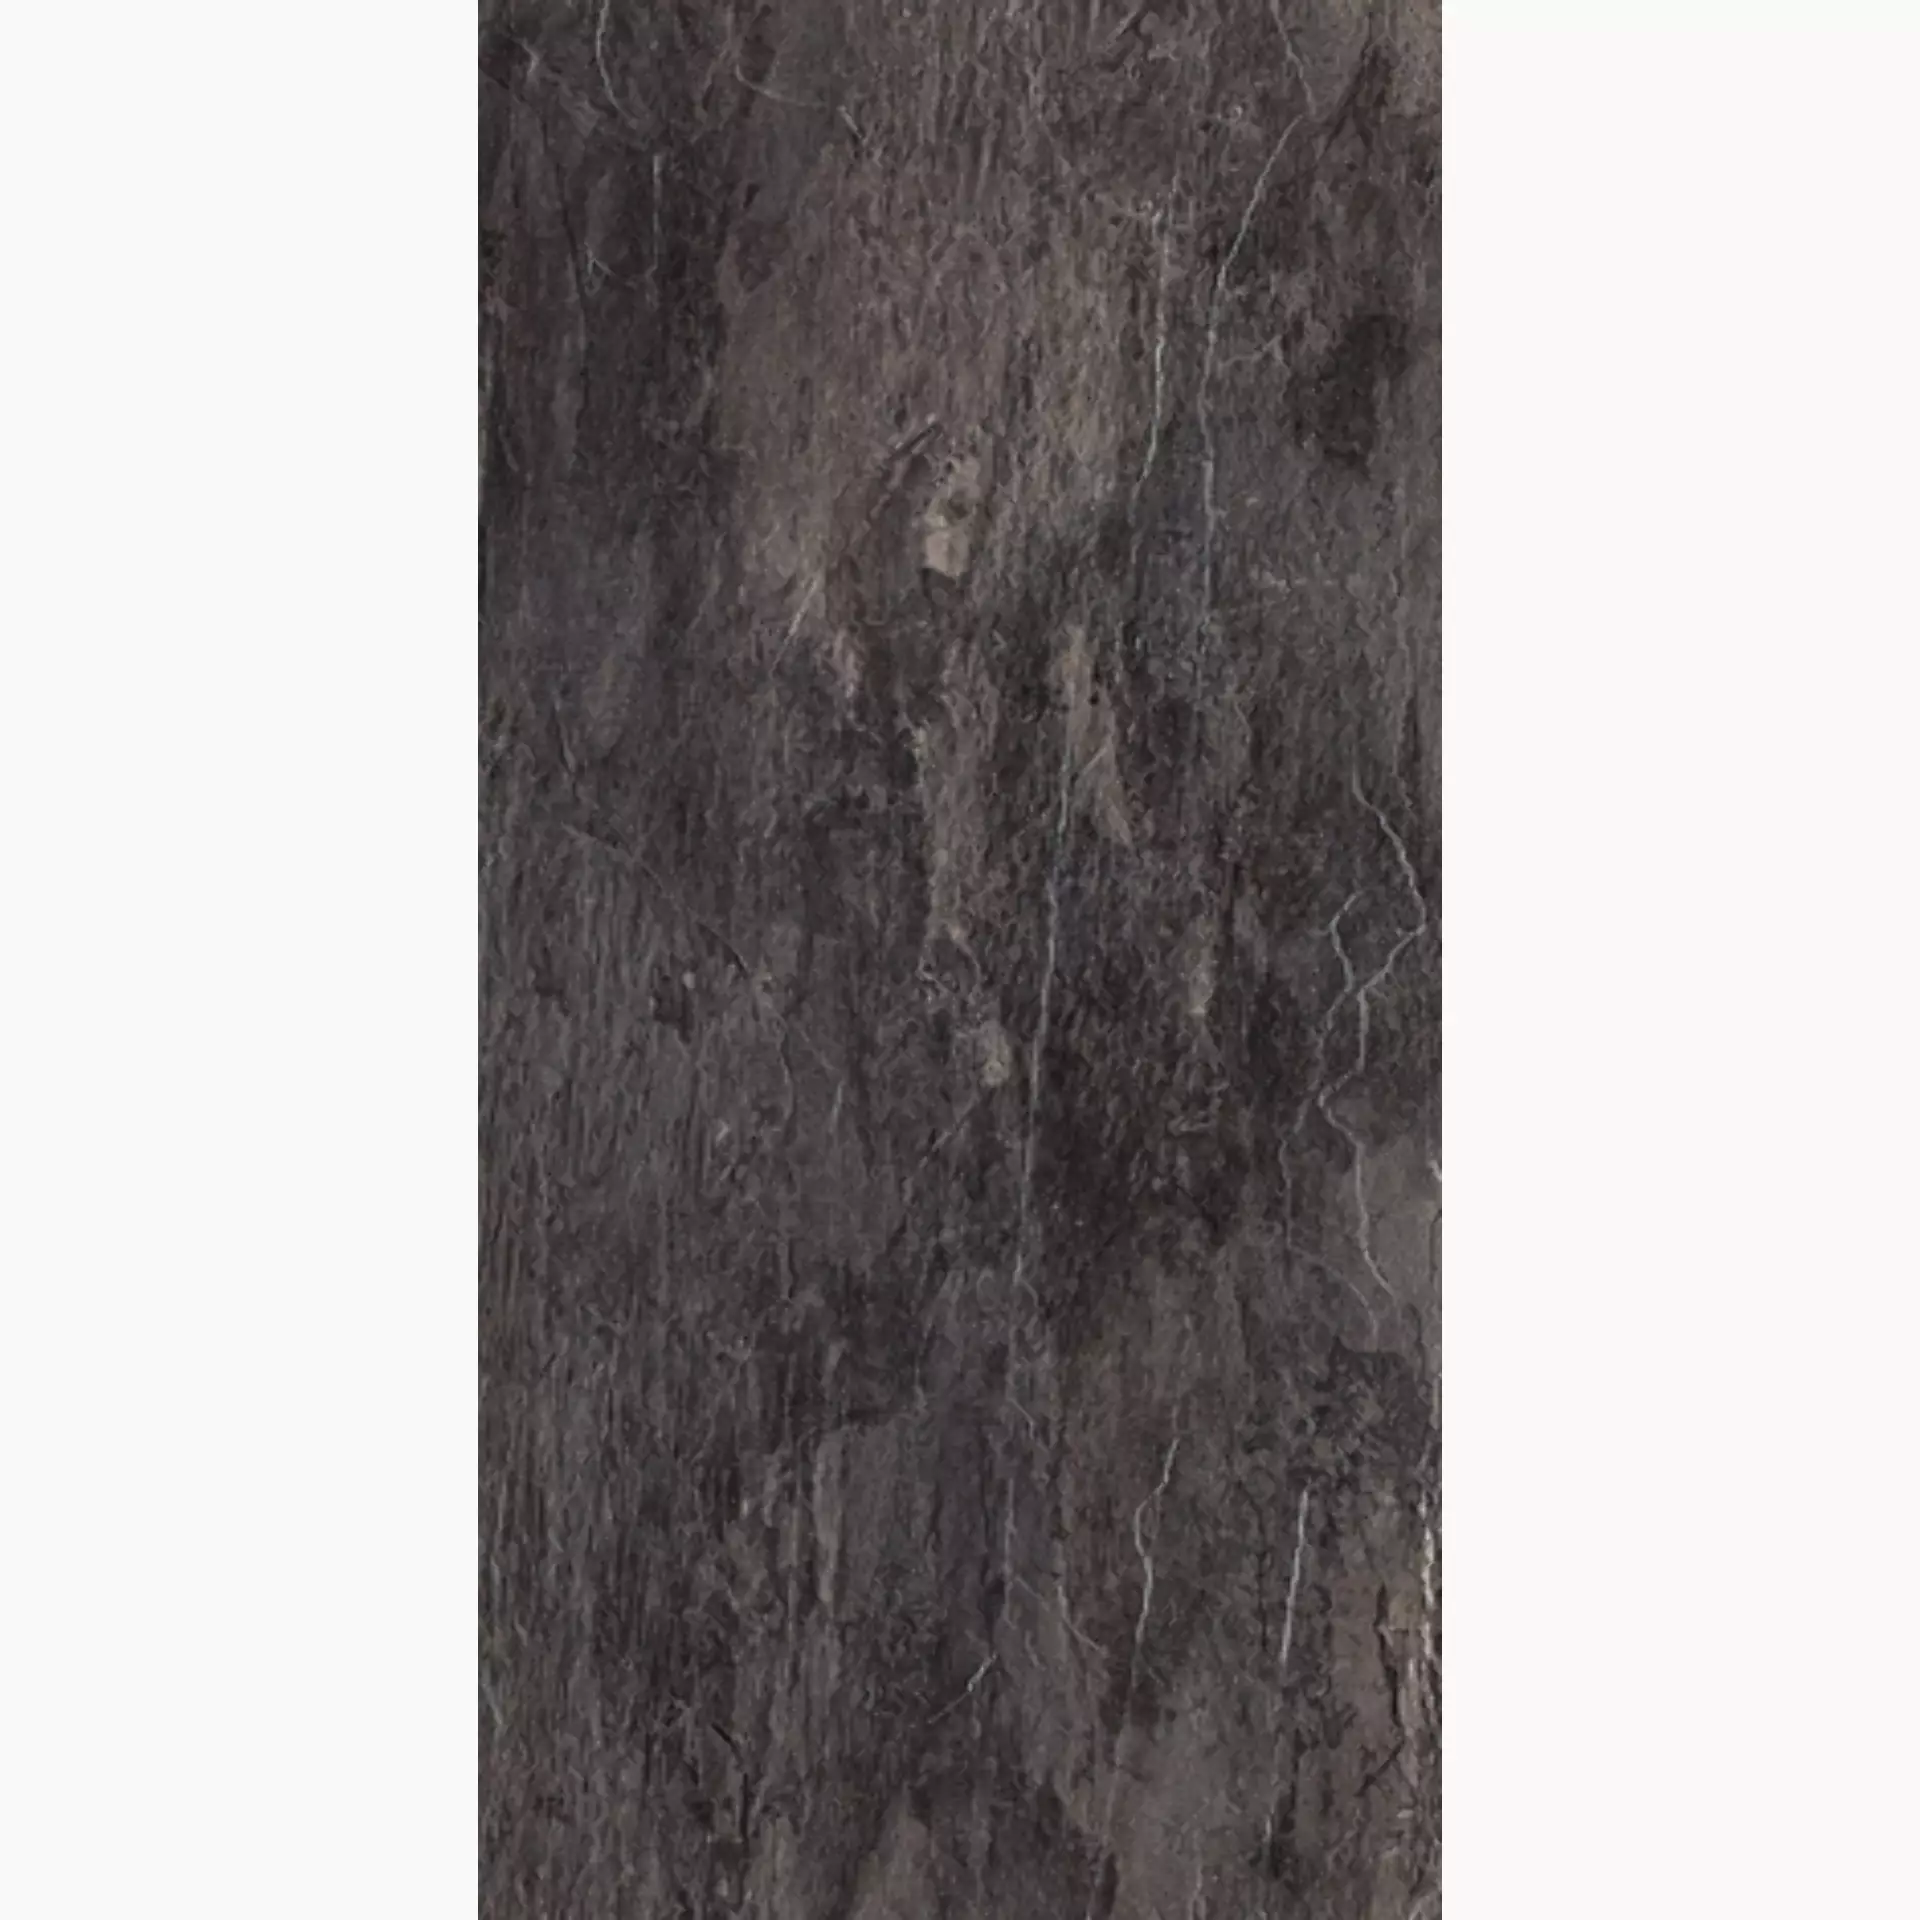 Florim Ardoise Noir Naturale – Matt 738722 40x80cm rectified 9mm